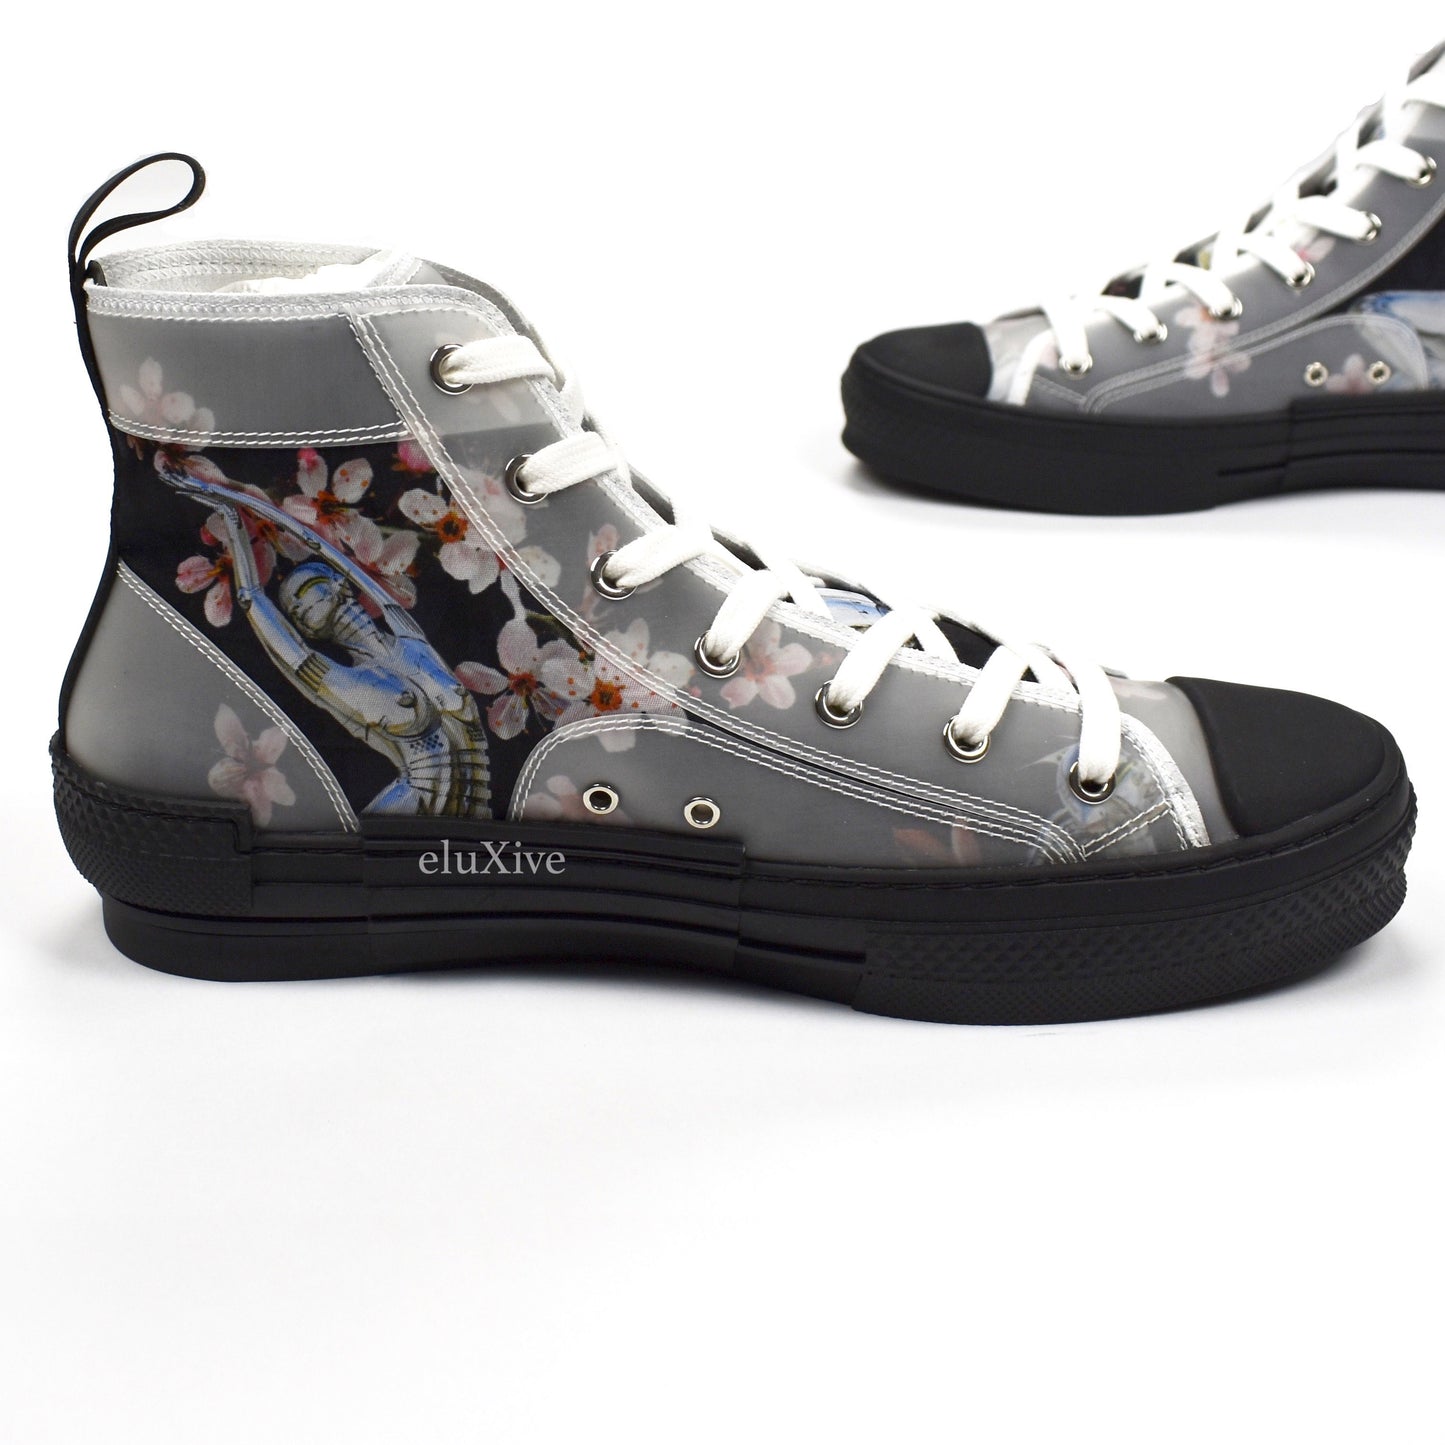 Dior x Sorayama - Robot Print B23 Monogram Sneakers (Black)